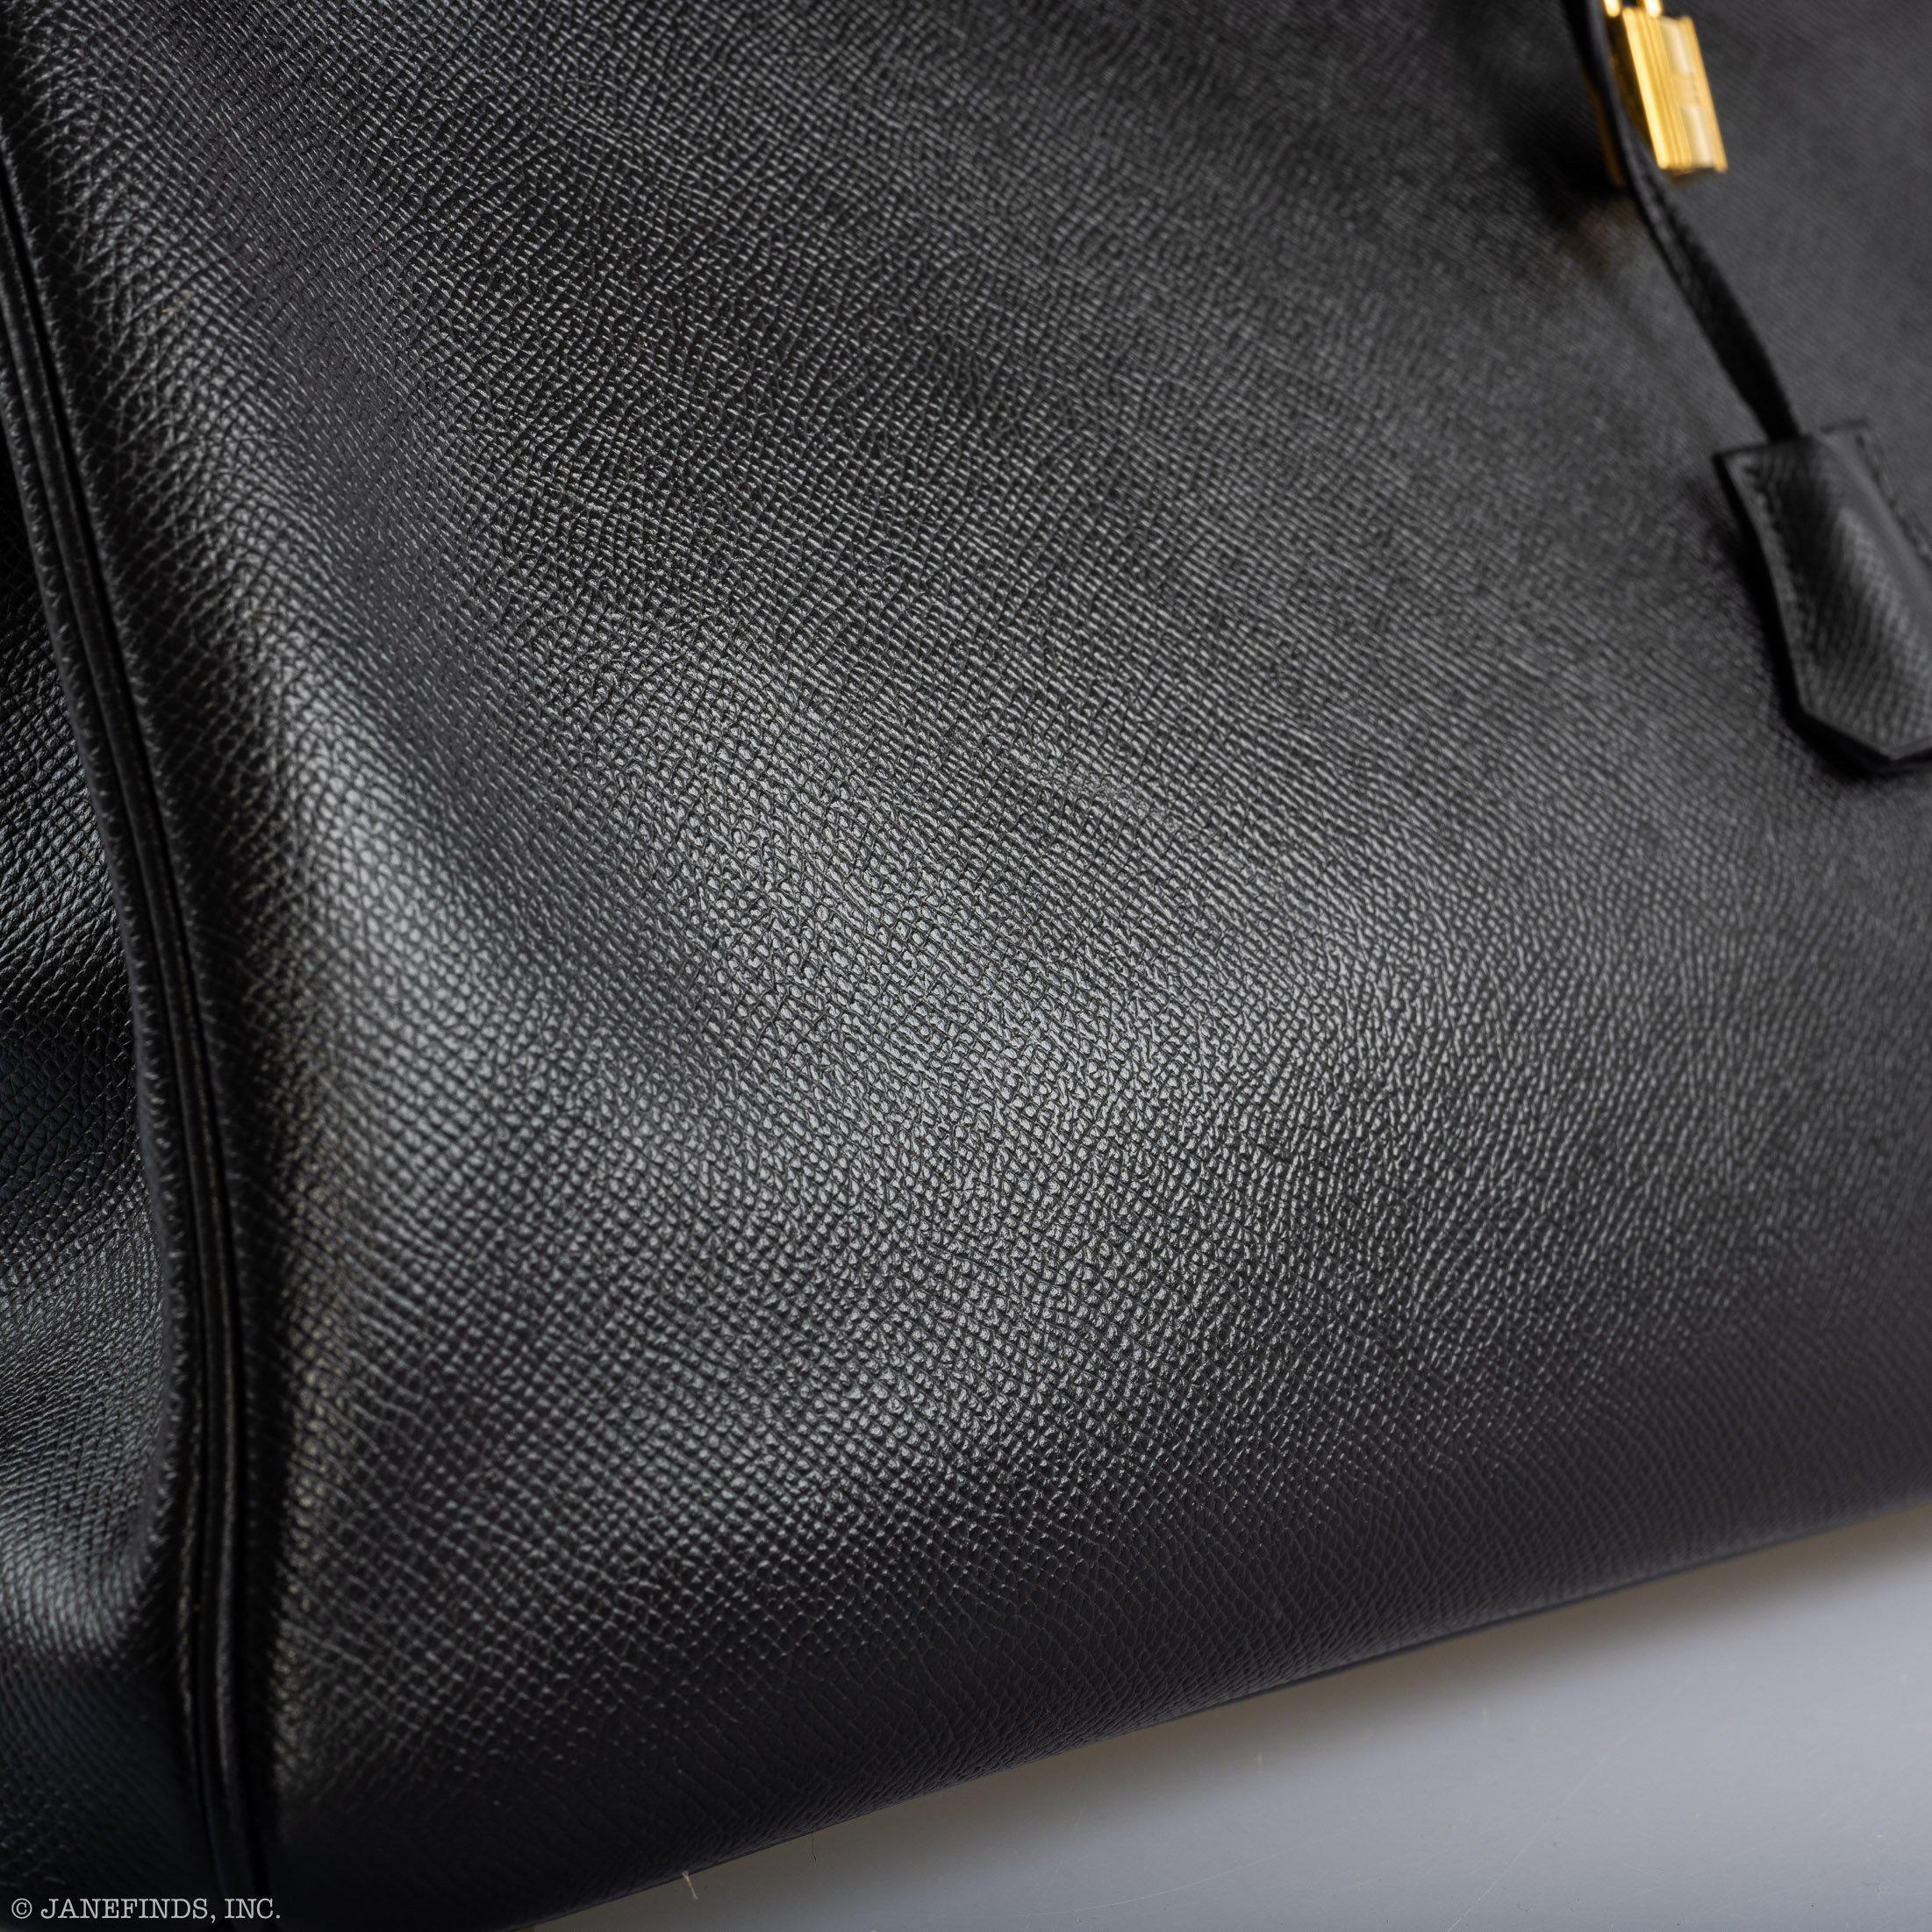 Hermès Birkin 40 Black Epsom Leather Gold Hardware - 2011, Square O